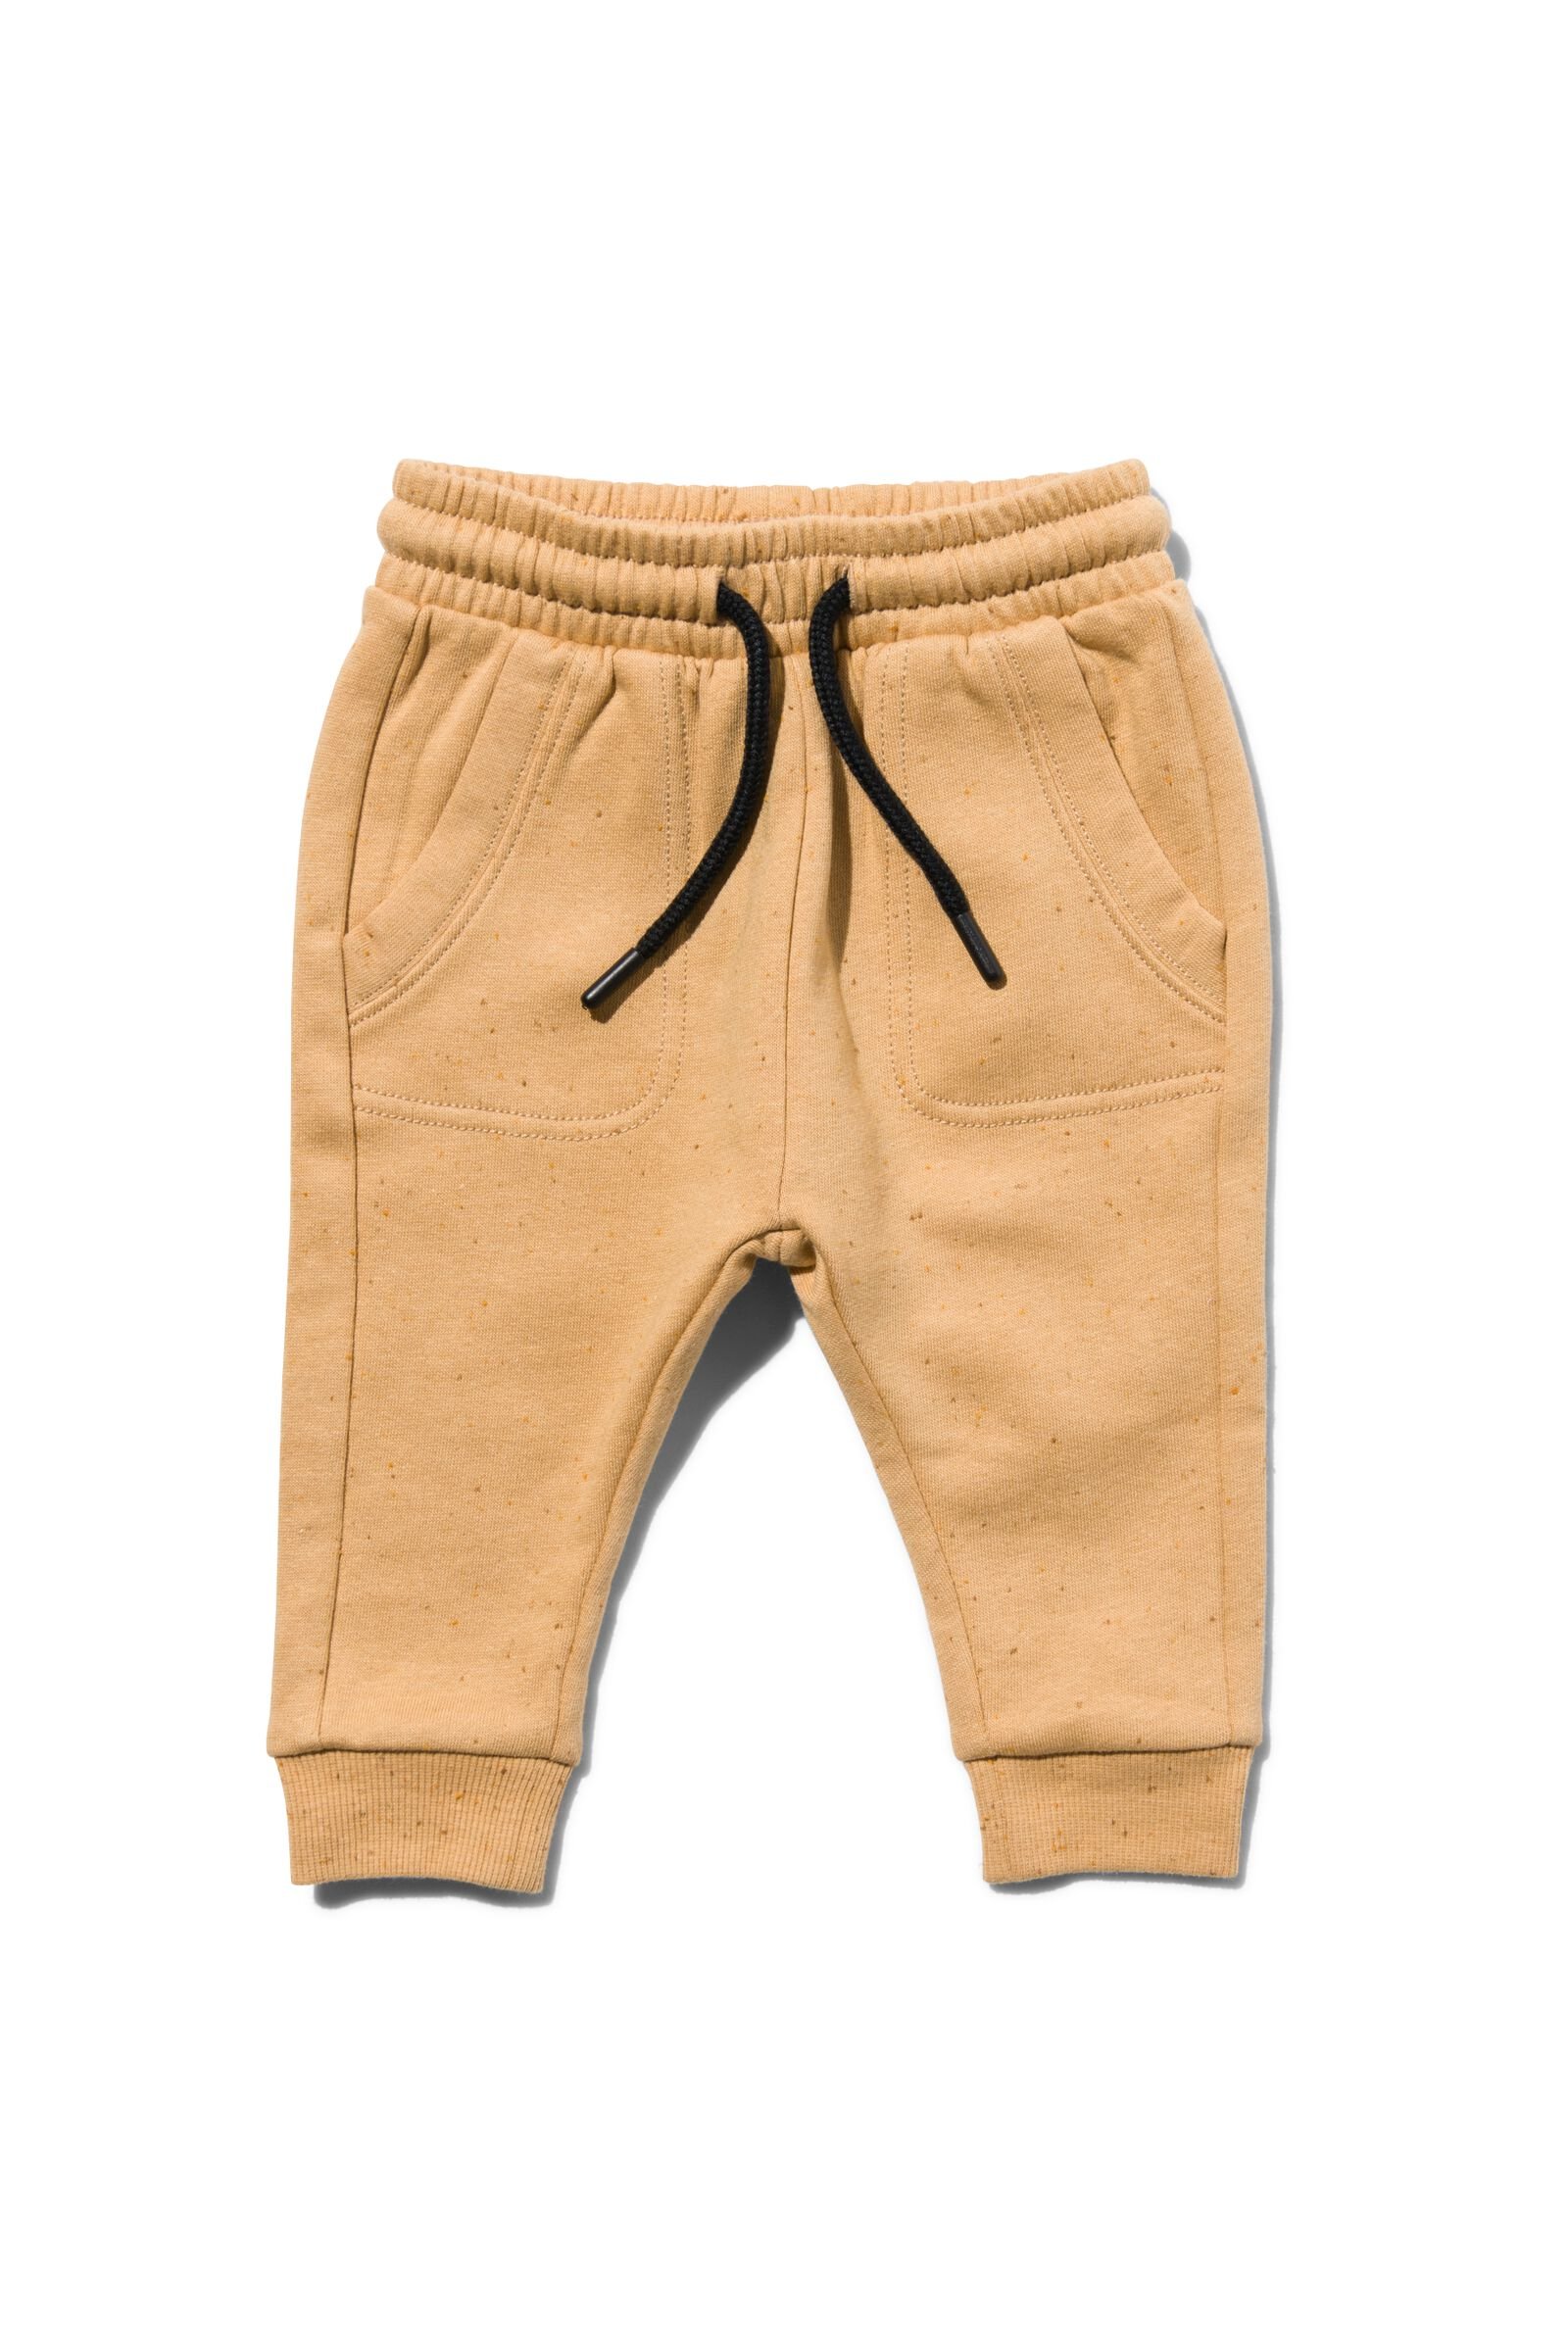 pantalon sweat bébé nappy sable 62 - 33166541 - HEMA